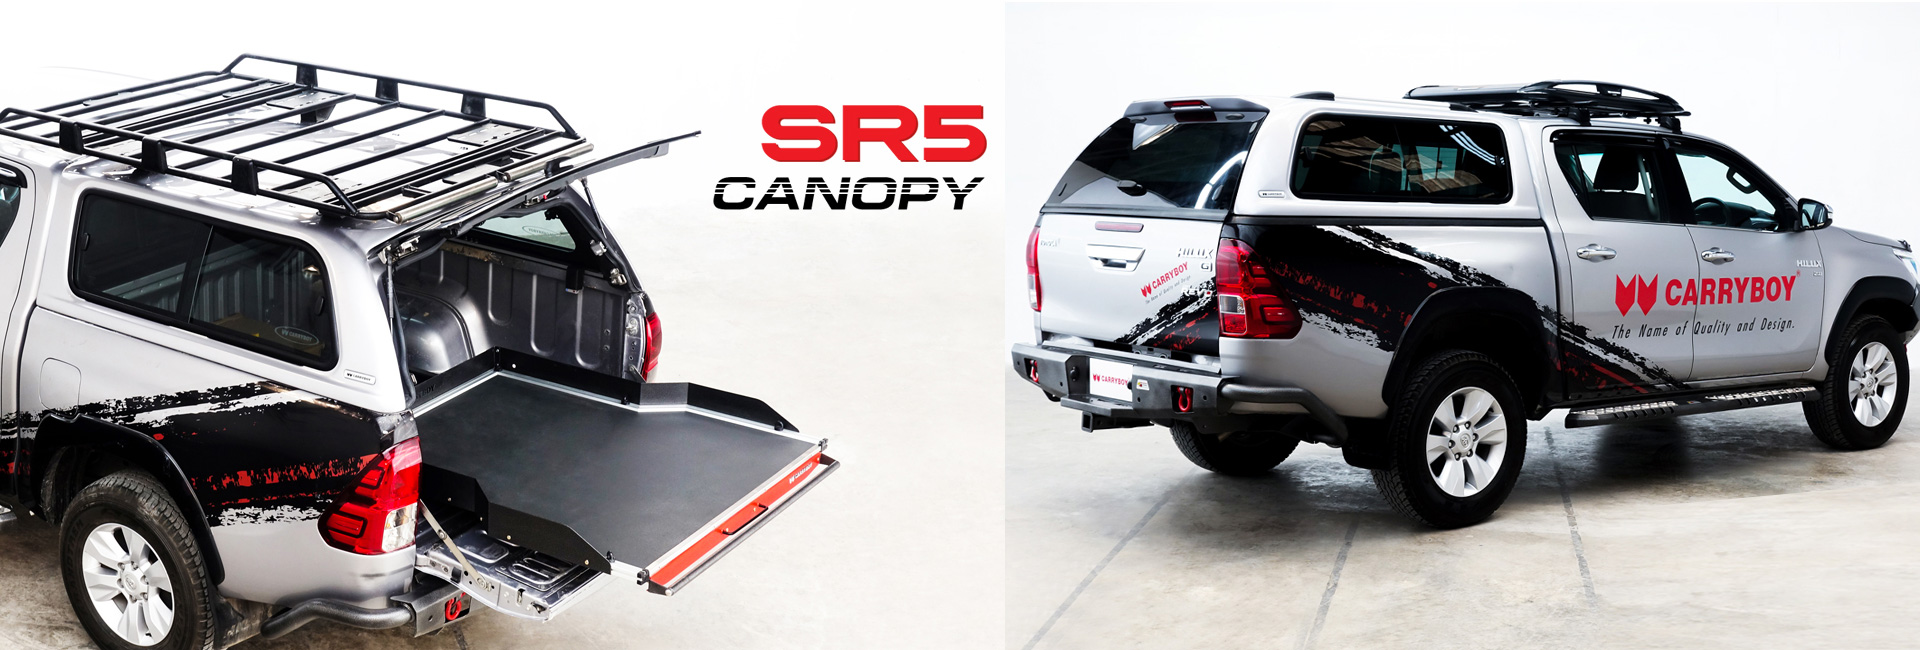 Banner-SR5-canopy